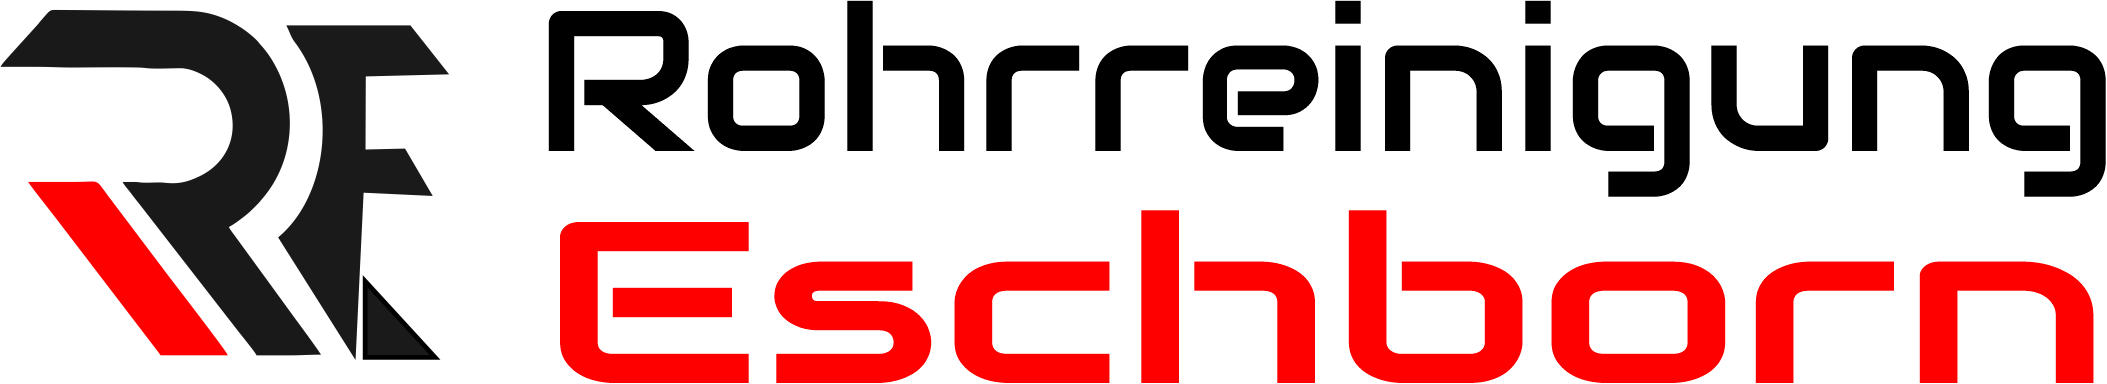 Rohrreinigung Eschborn Logo